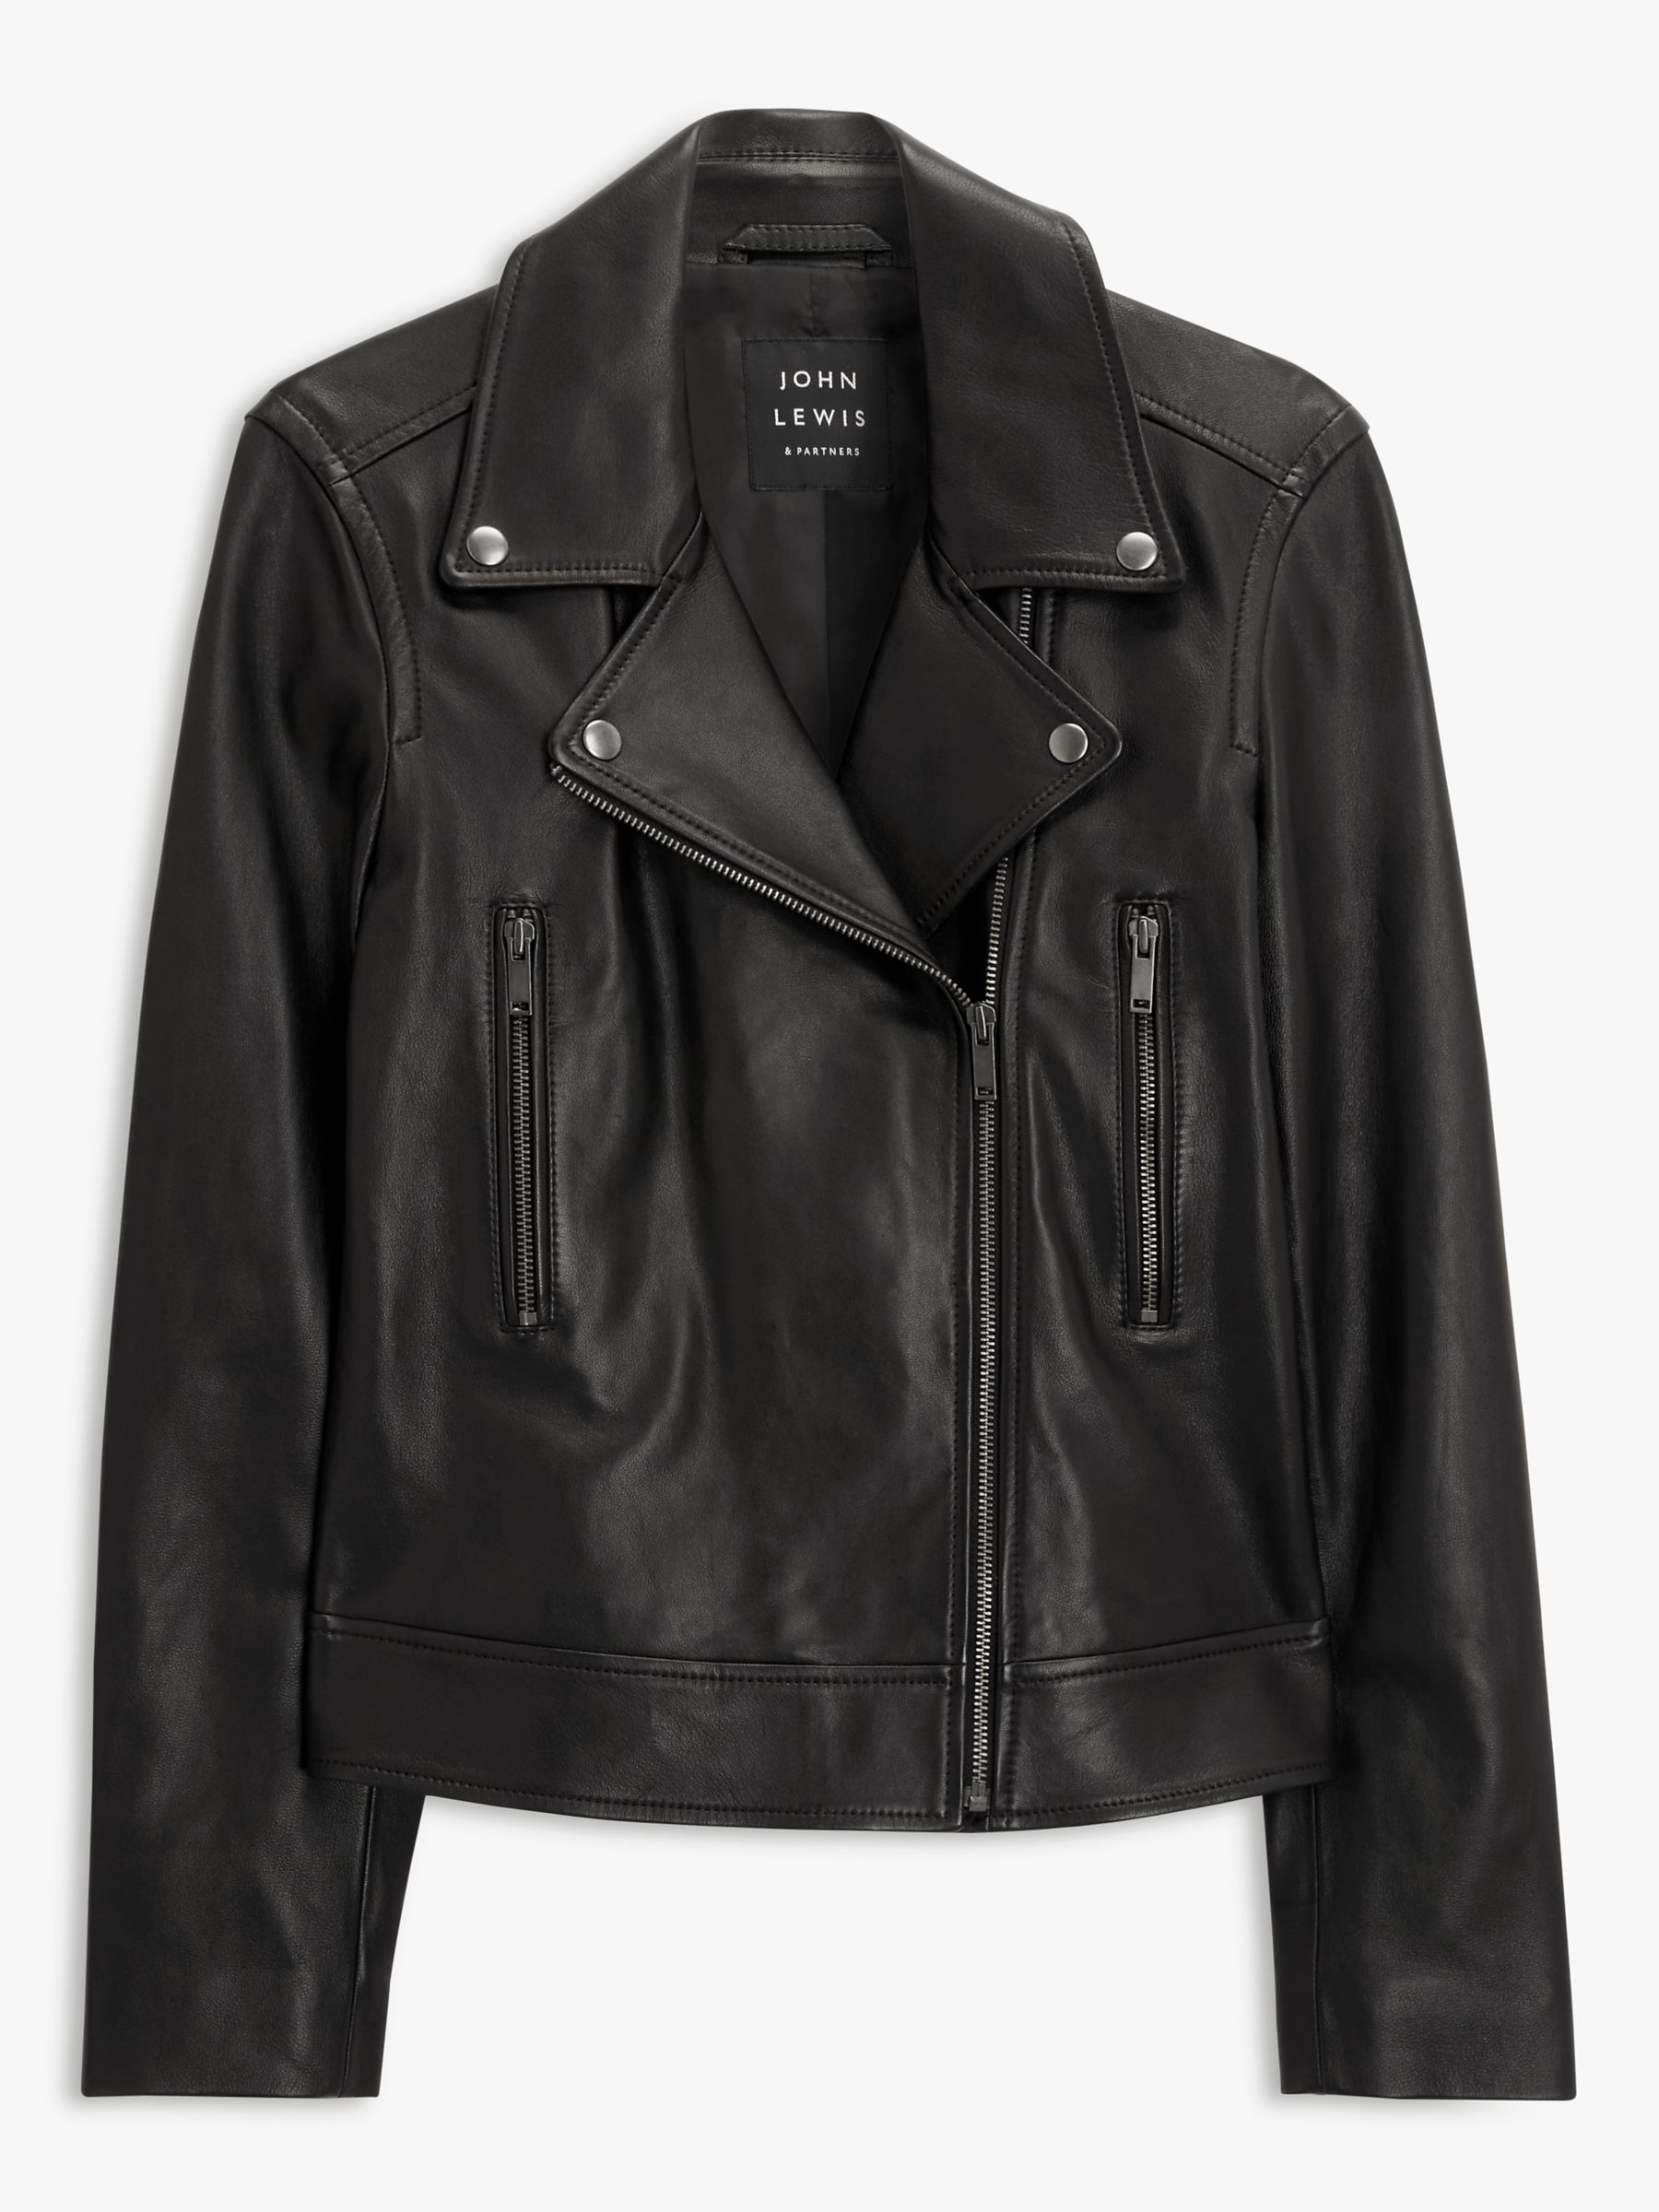 John Lewis Leather Biker Jacket, Black, Black at John Lewis & Partners